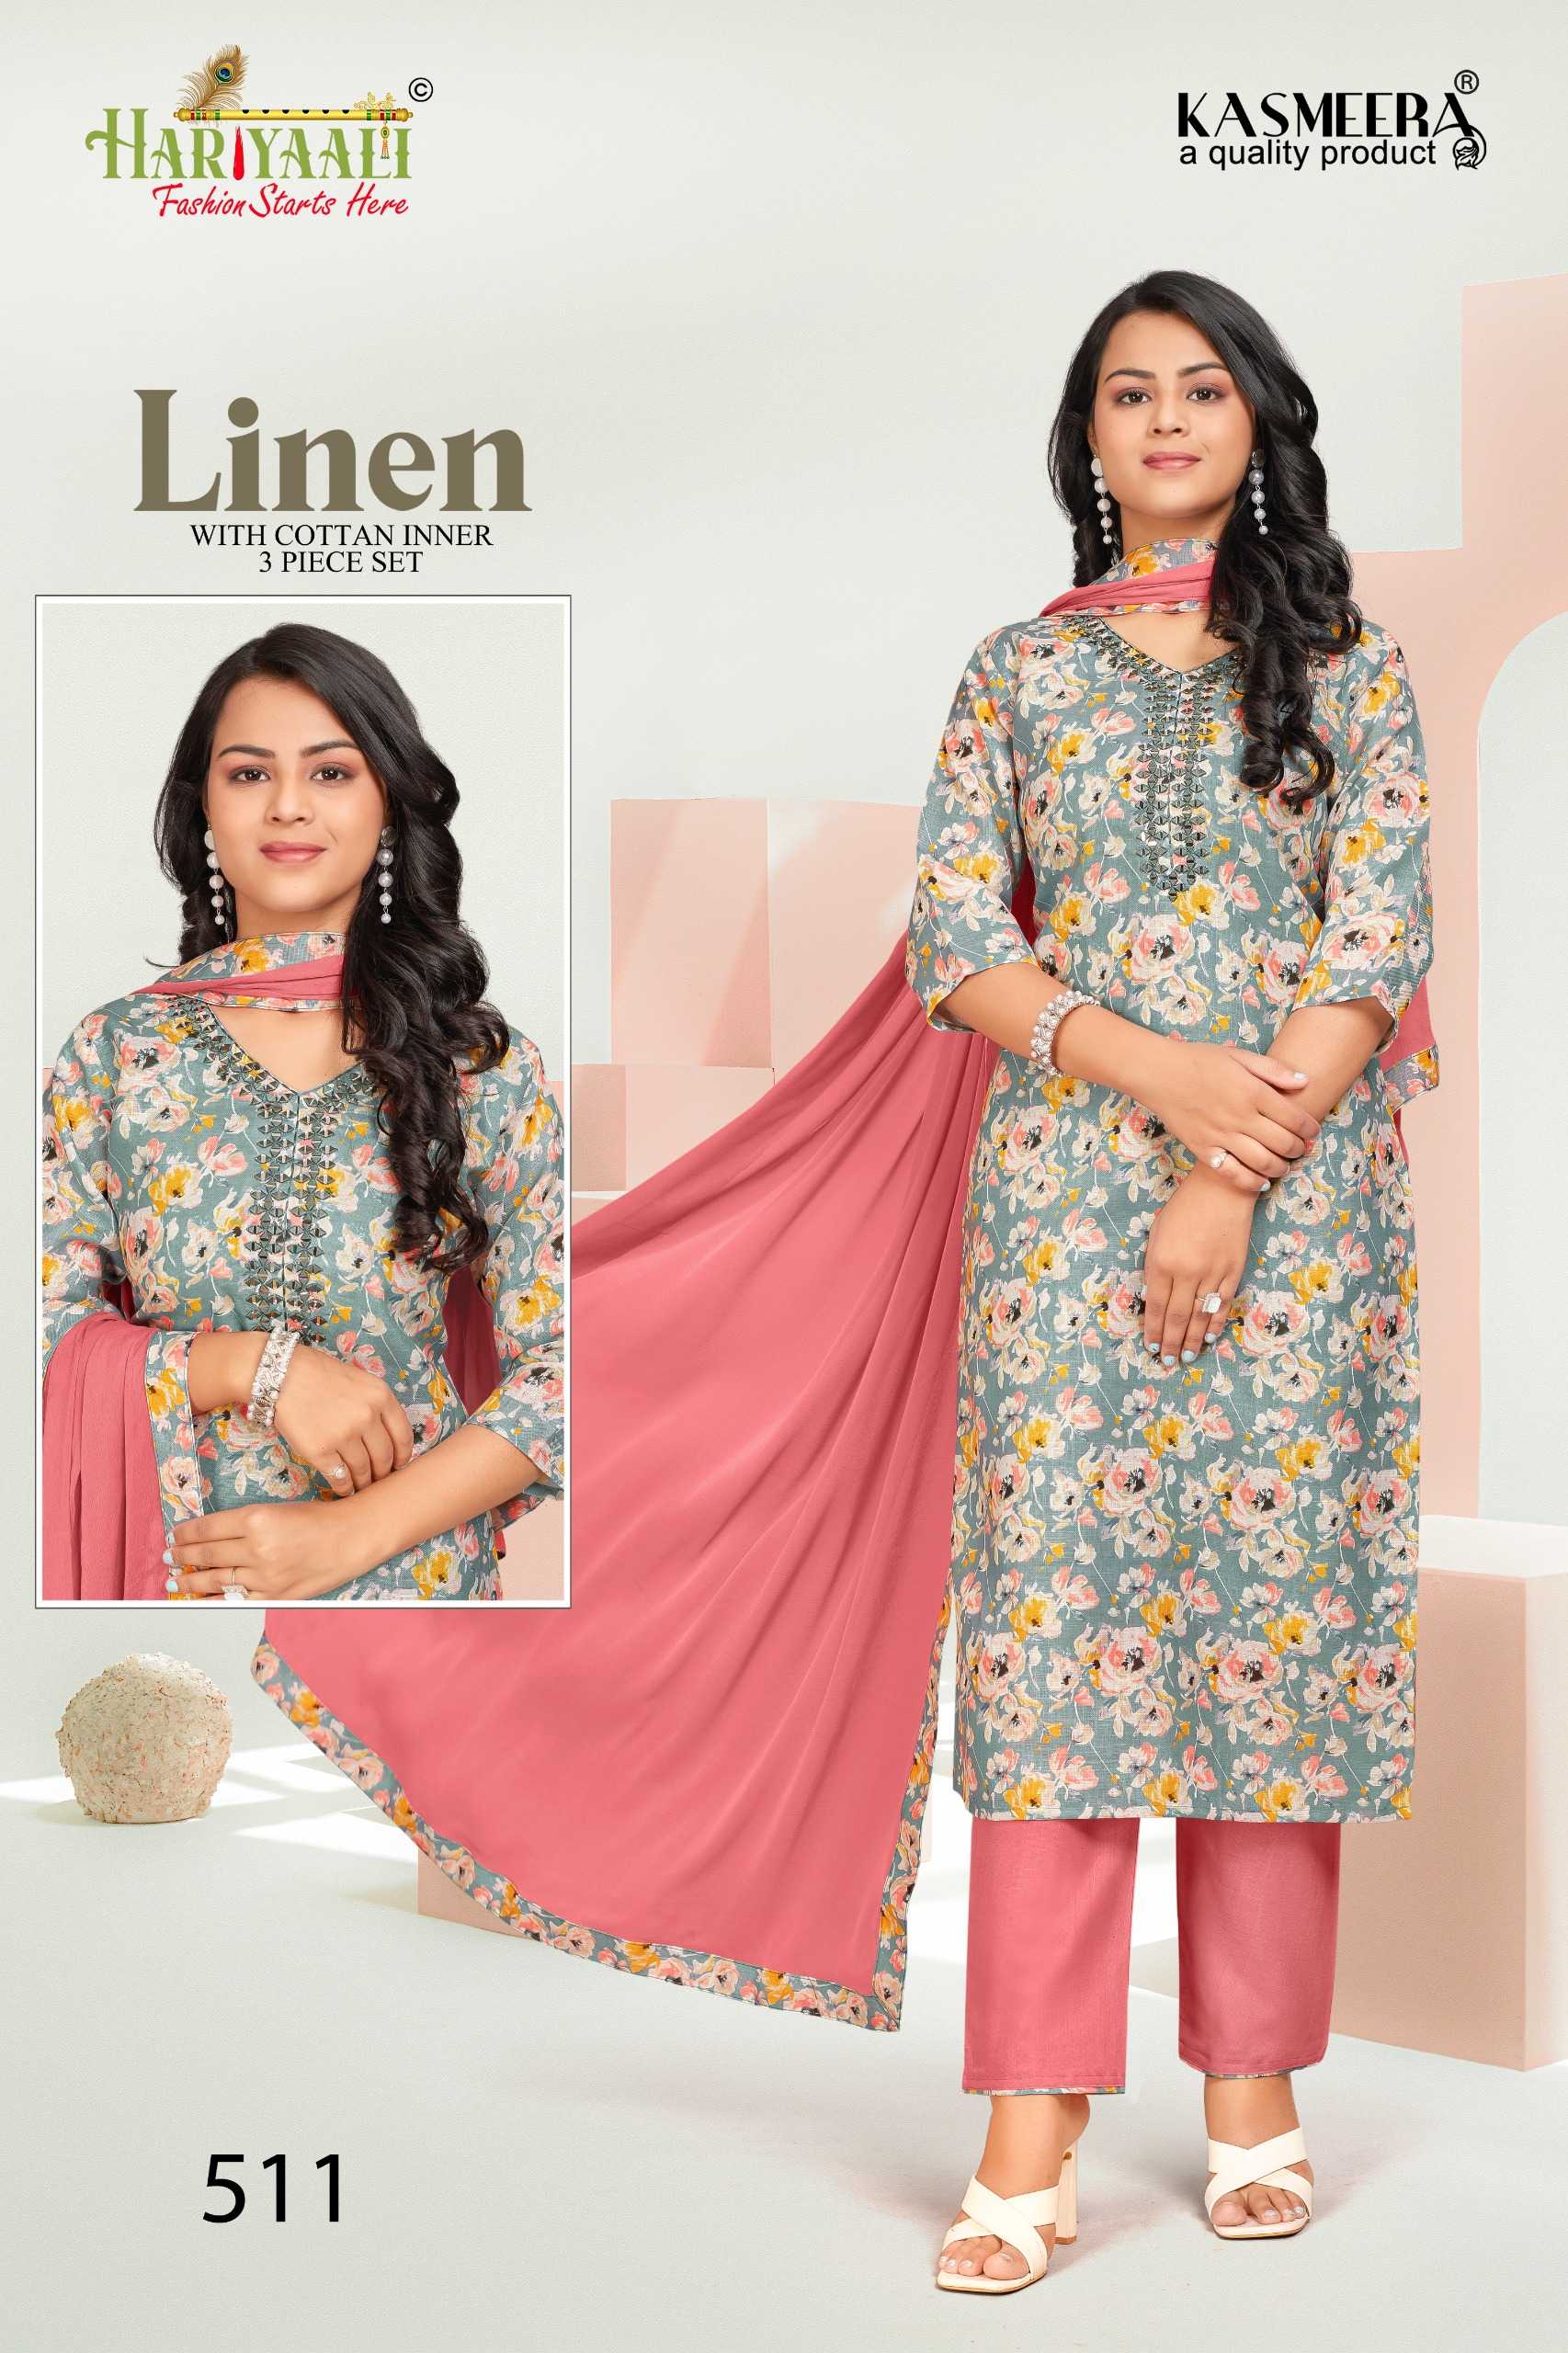 hariyaali presents linen vol 5 elegant look mirror work full stitch combo set salwar kameez 